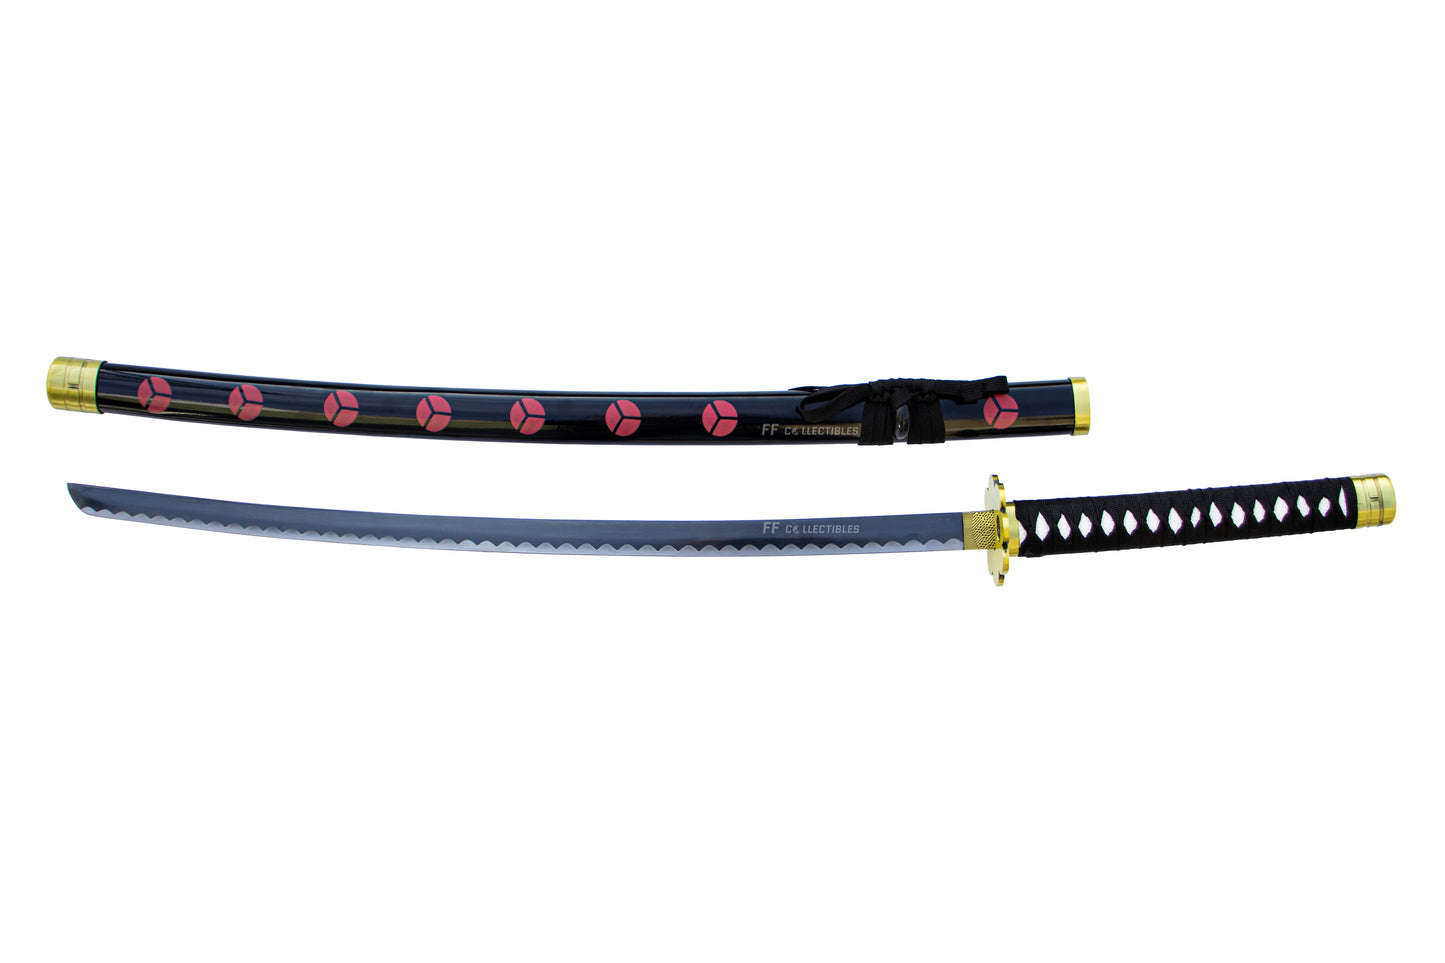 ONE PIECE – SHUSUI, THE SWORD OF RORONOA ZORO (w FREE sword stand)